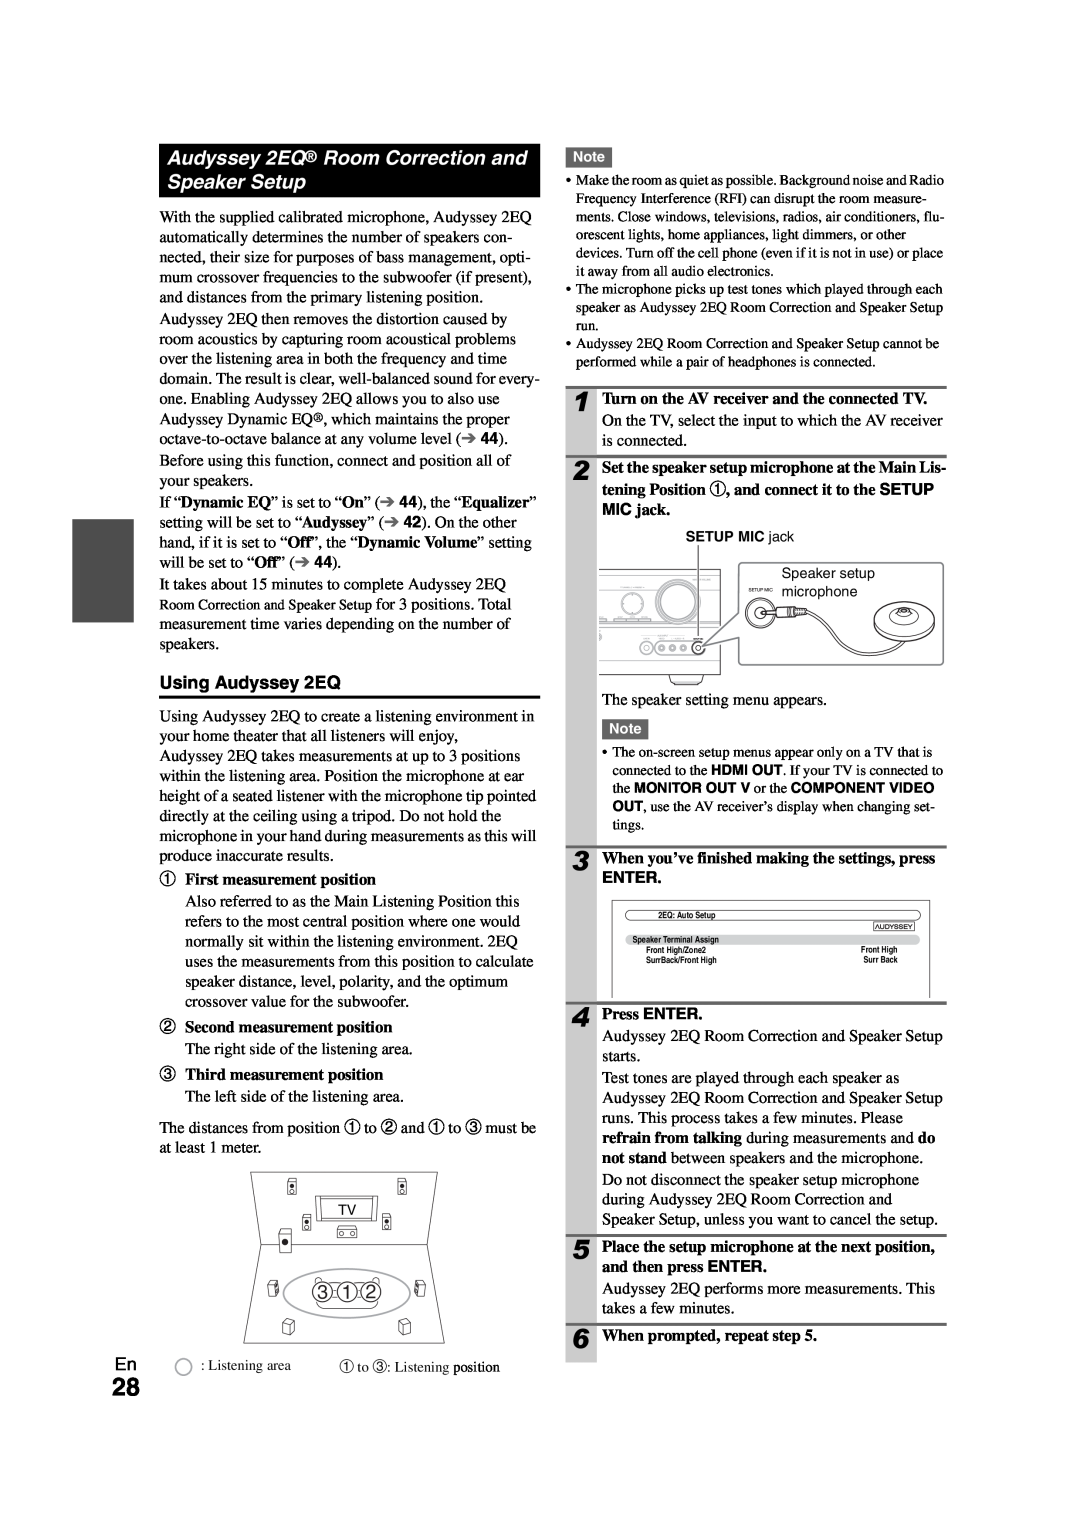 Onkyo HT-S7300 instruction manual Audyssey 2EQ Room Correction and, Speaker Setup, Using Audyssey 2EQ, Enter 